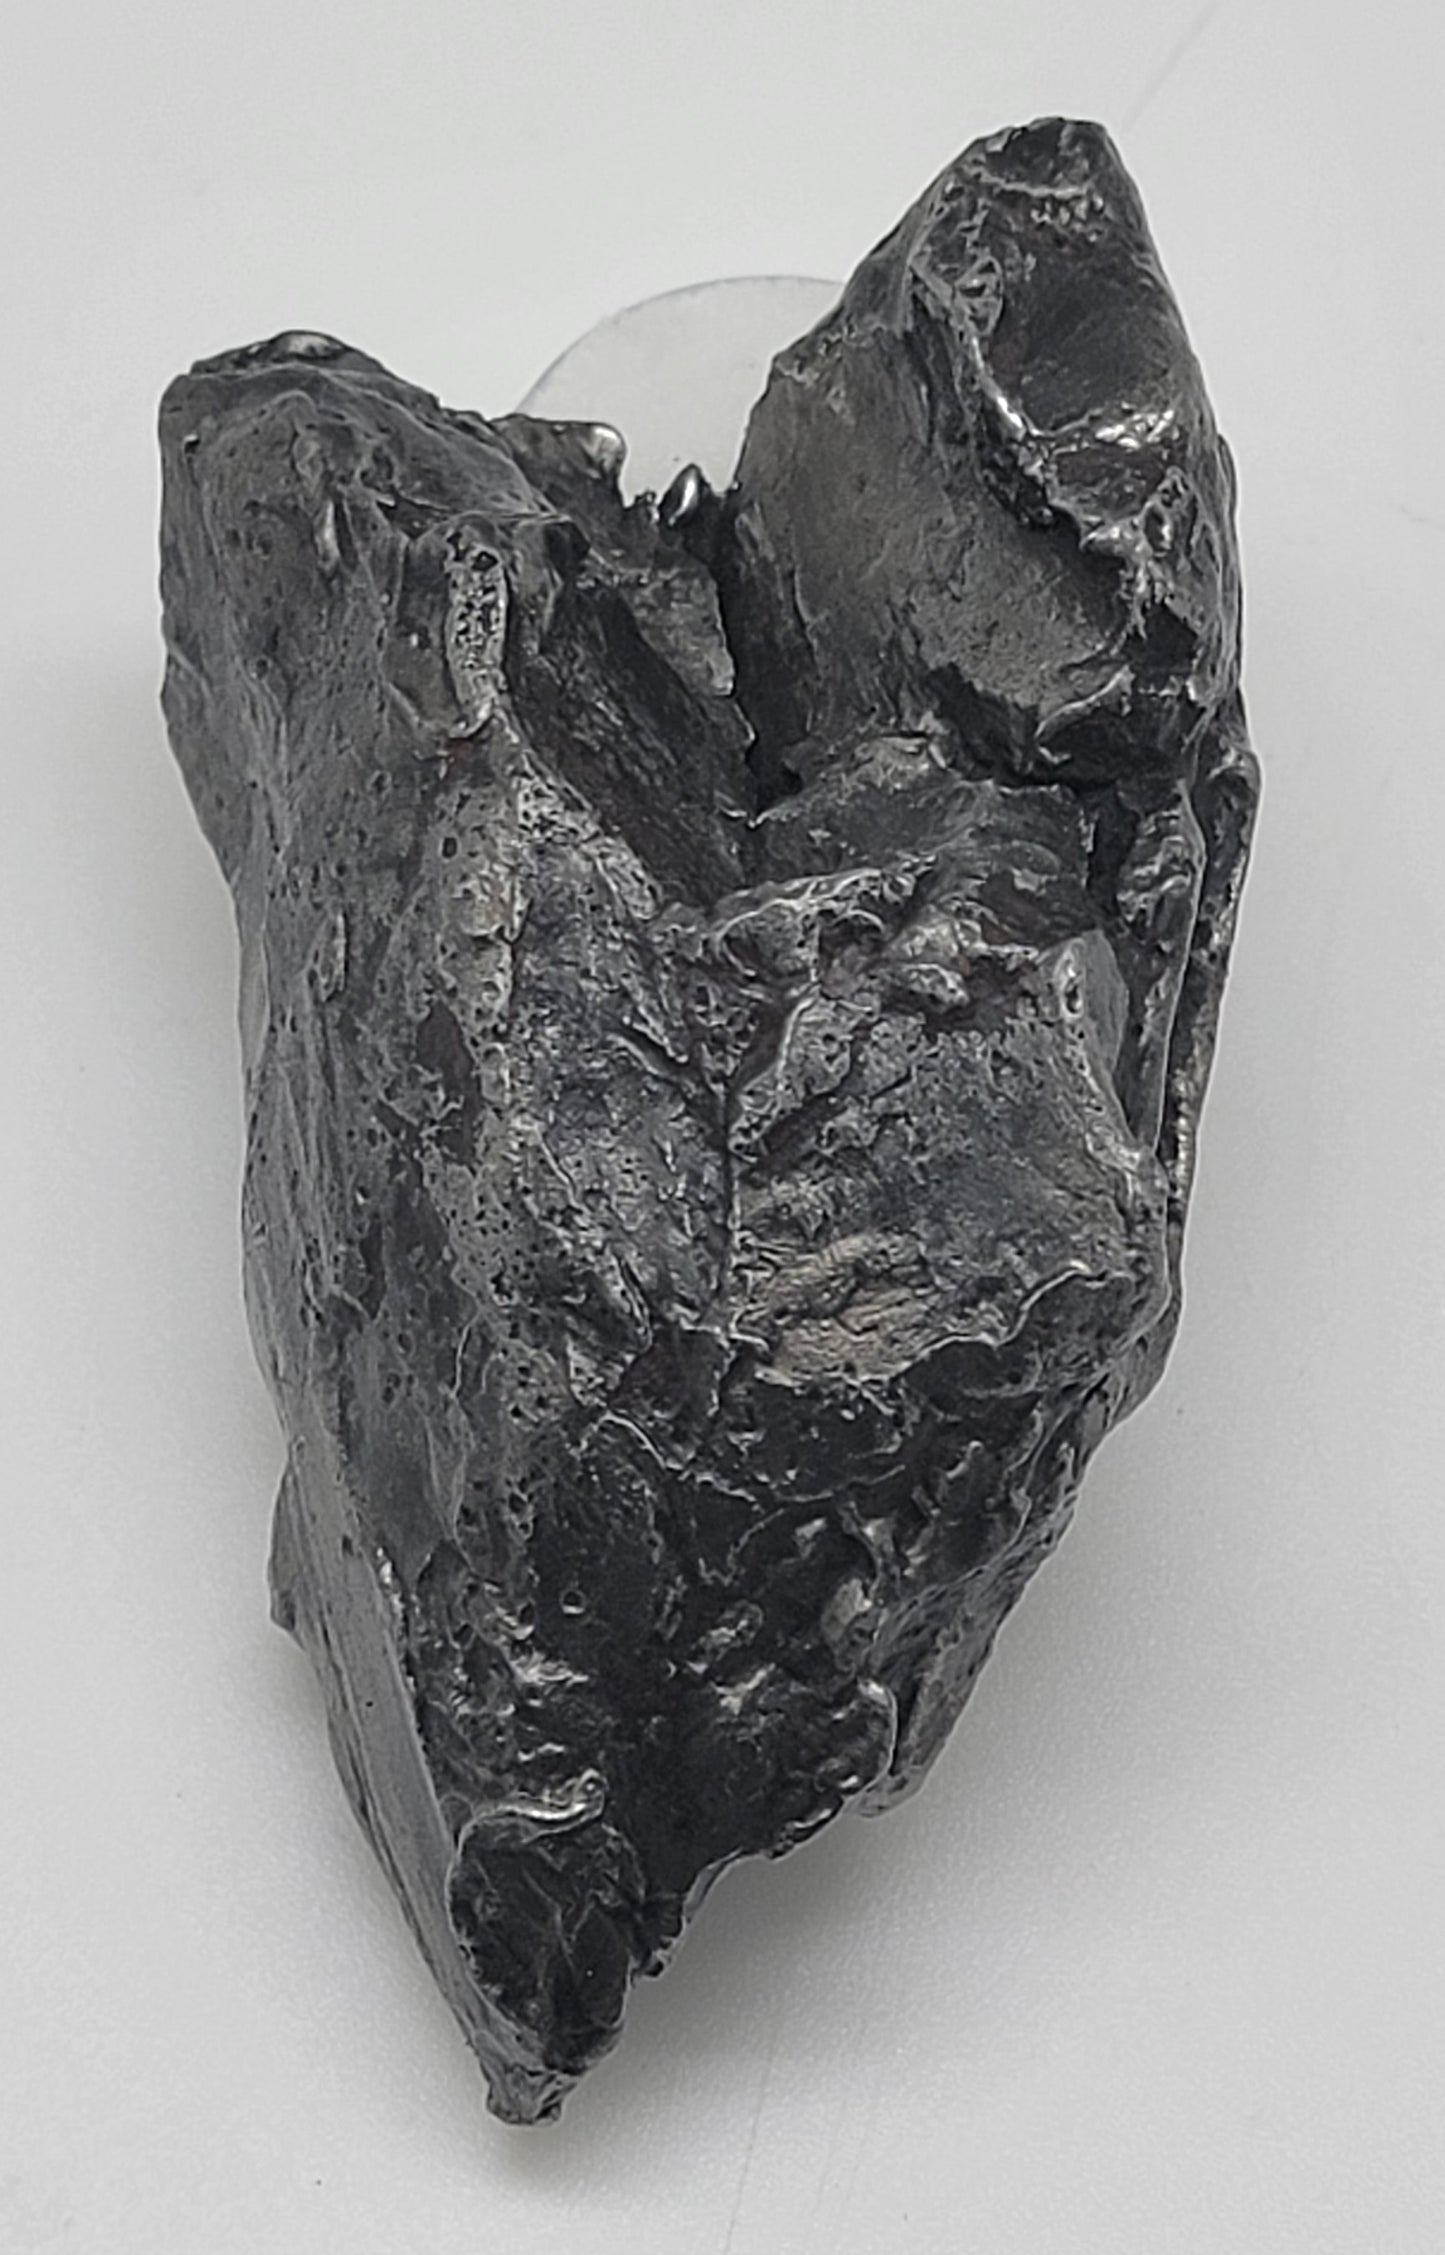 Sikhote-Alin Russian Iron Meteorite - 470g